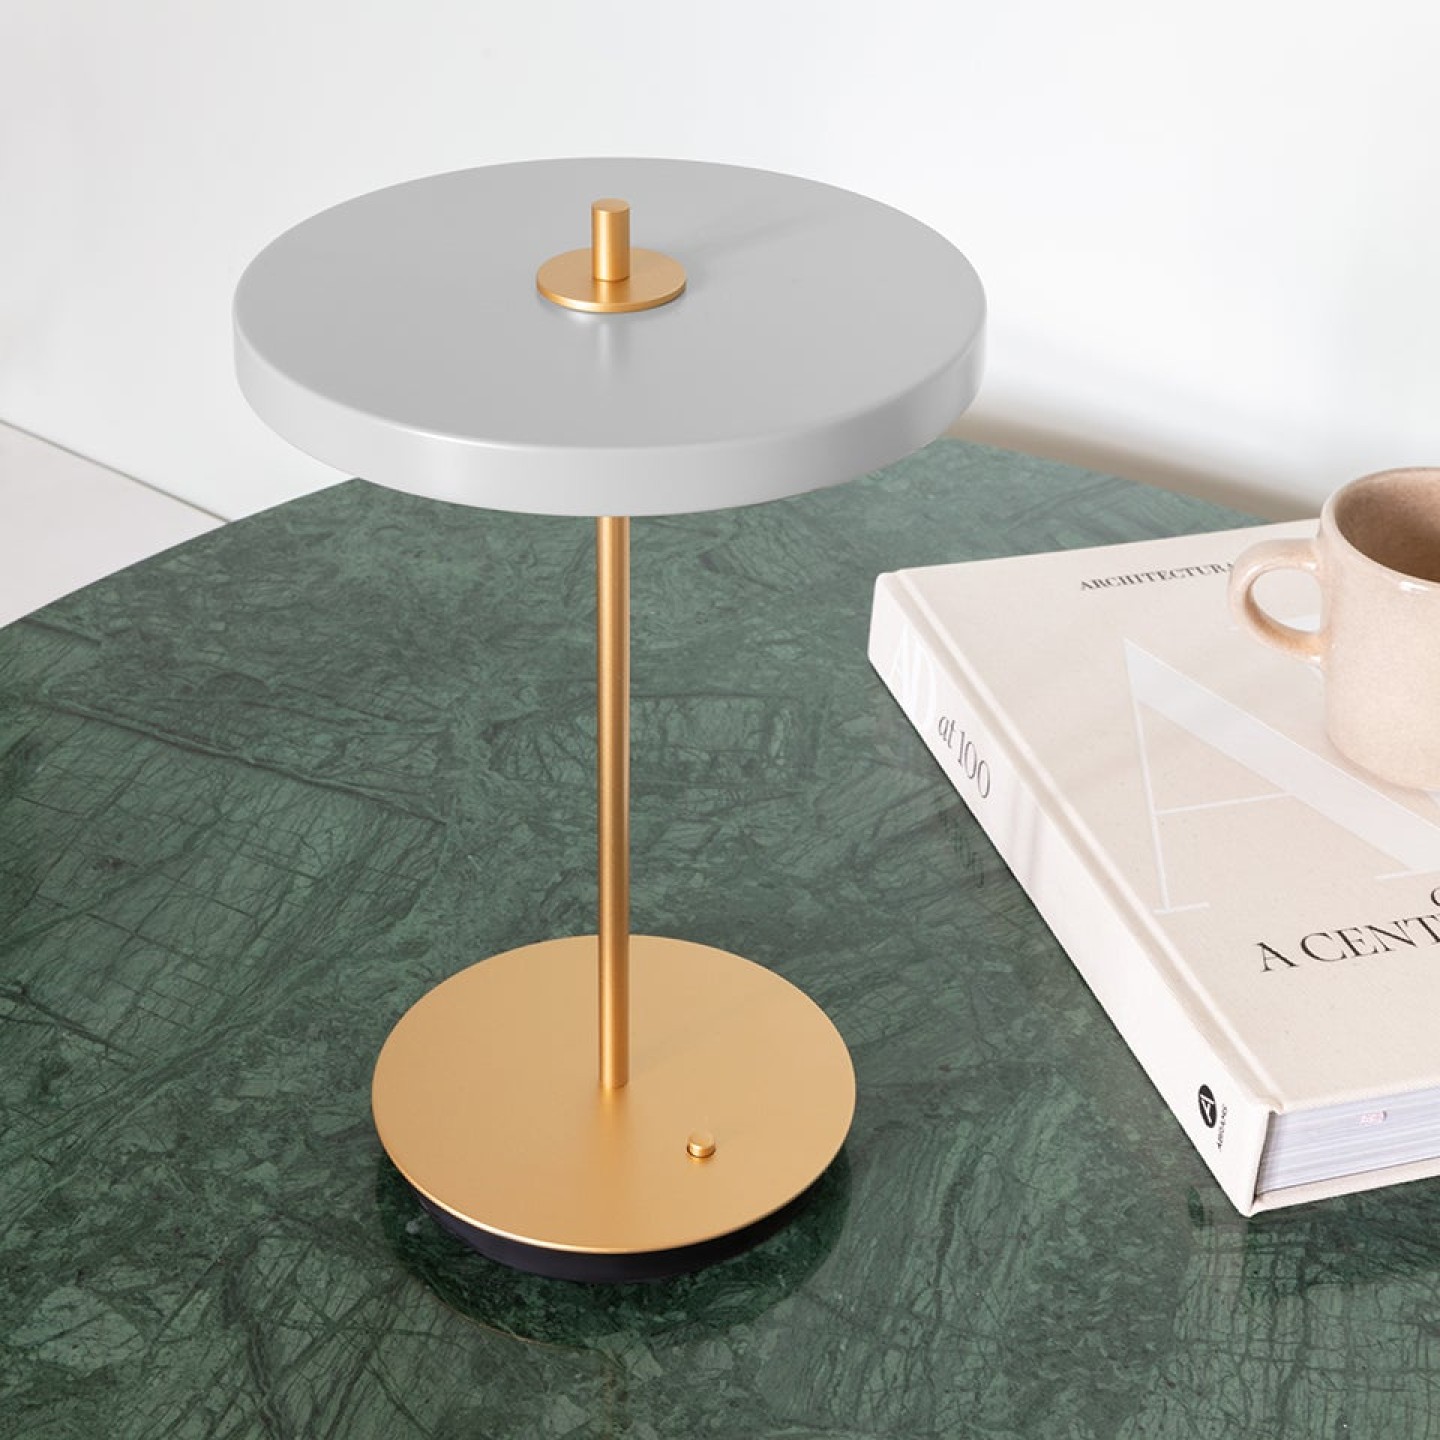 THE ASTERIA MOVE PORTABLE TABLE LAMP